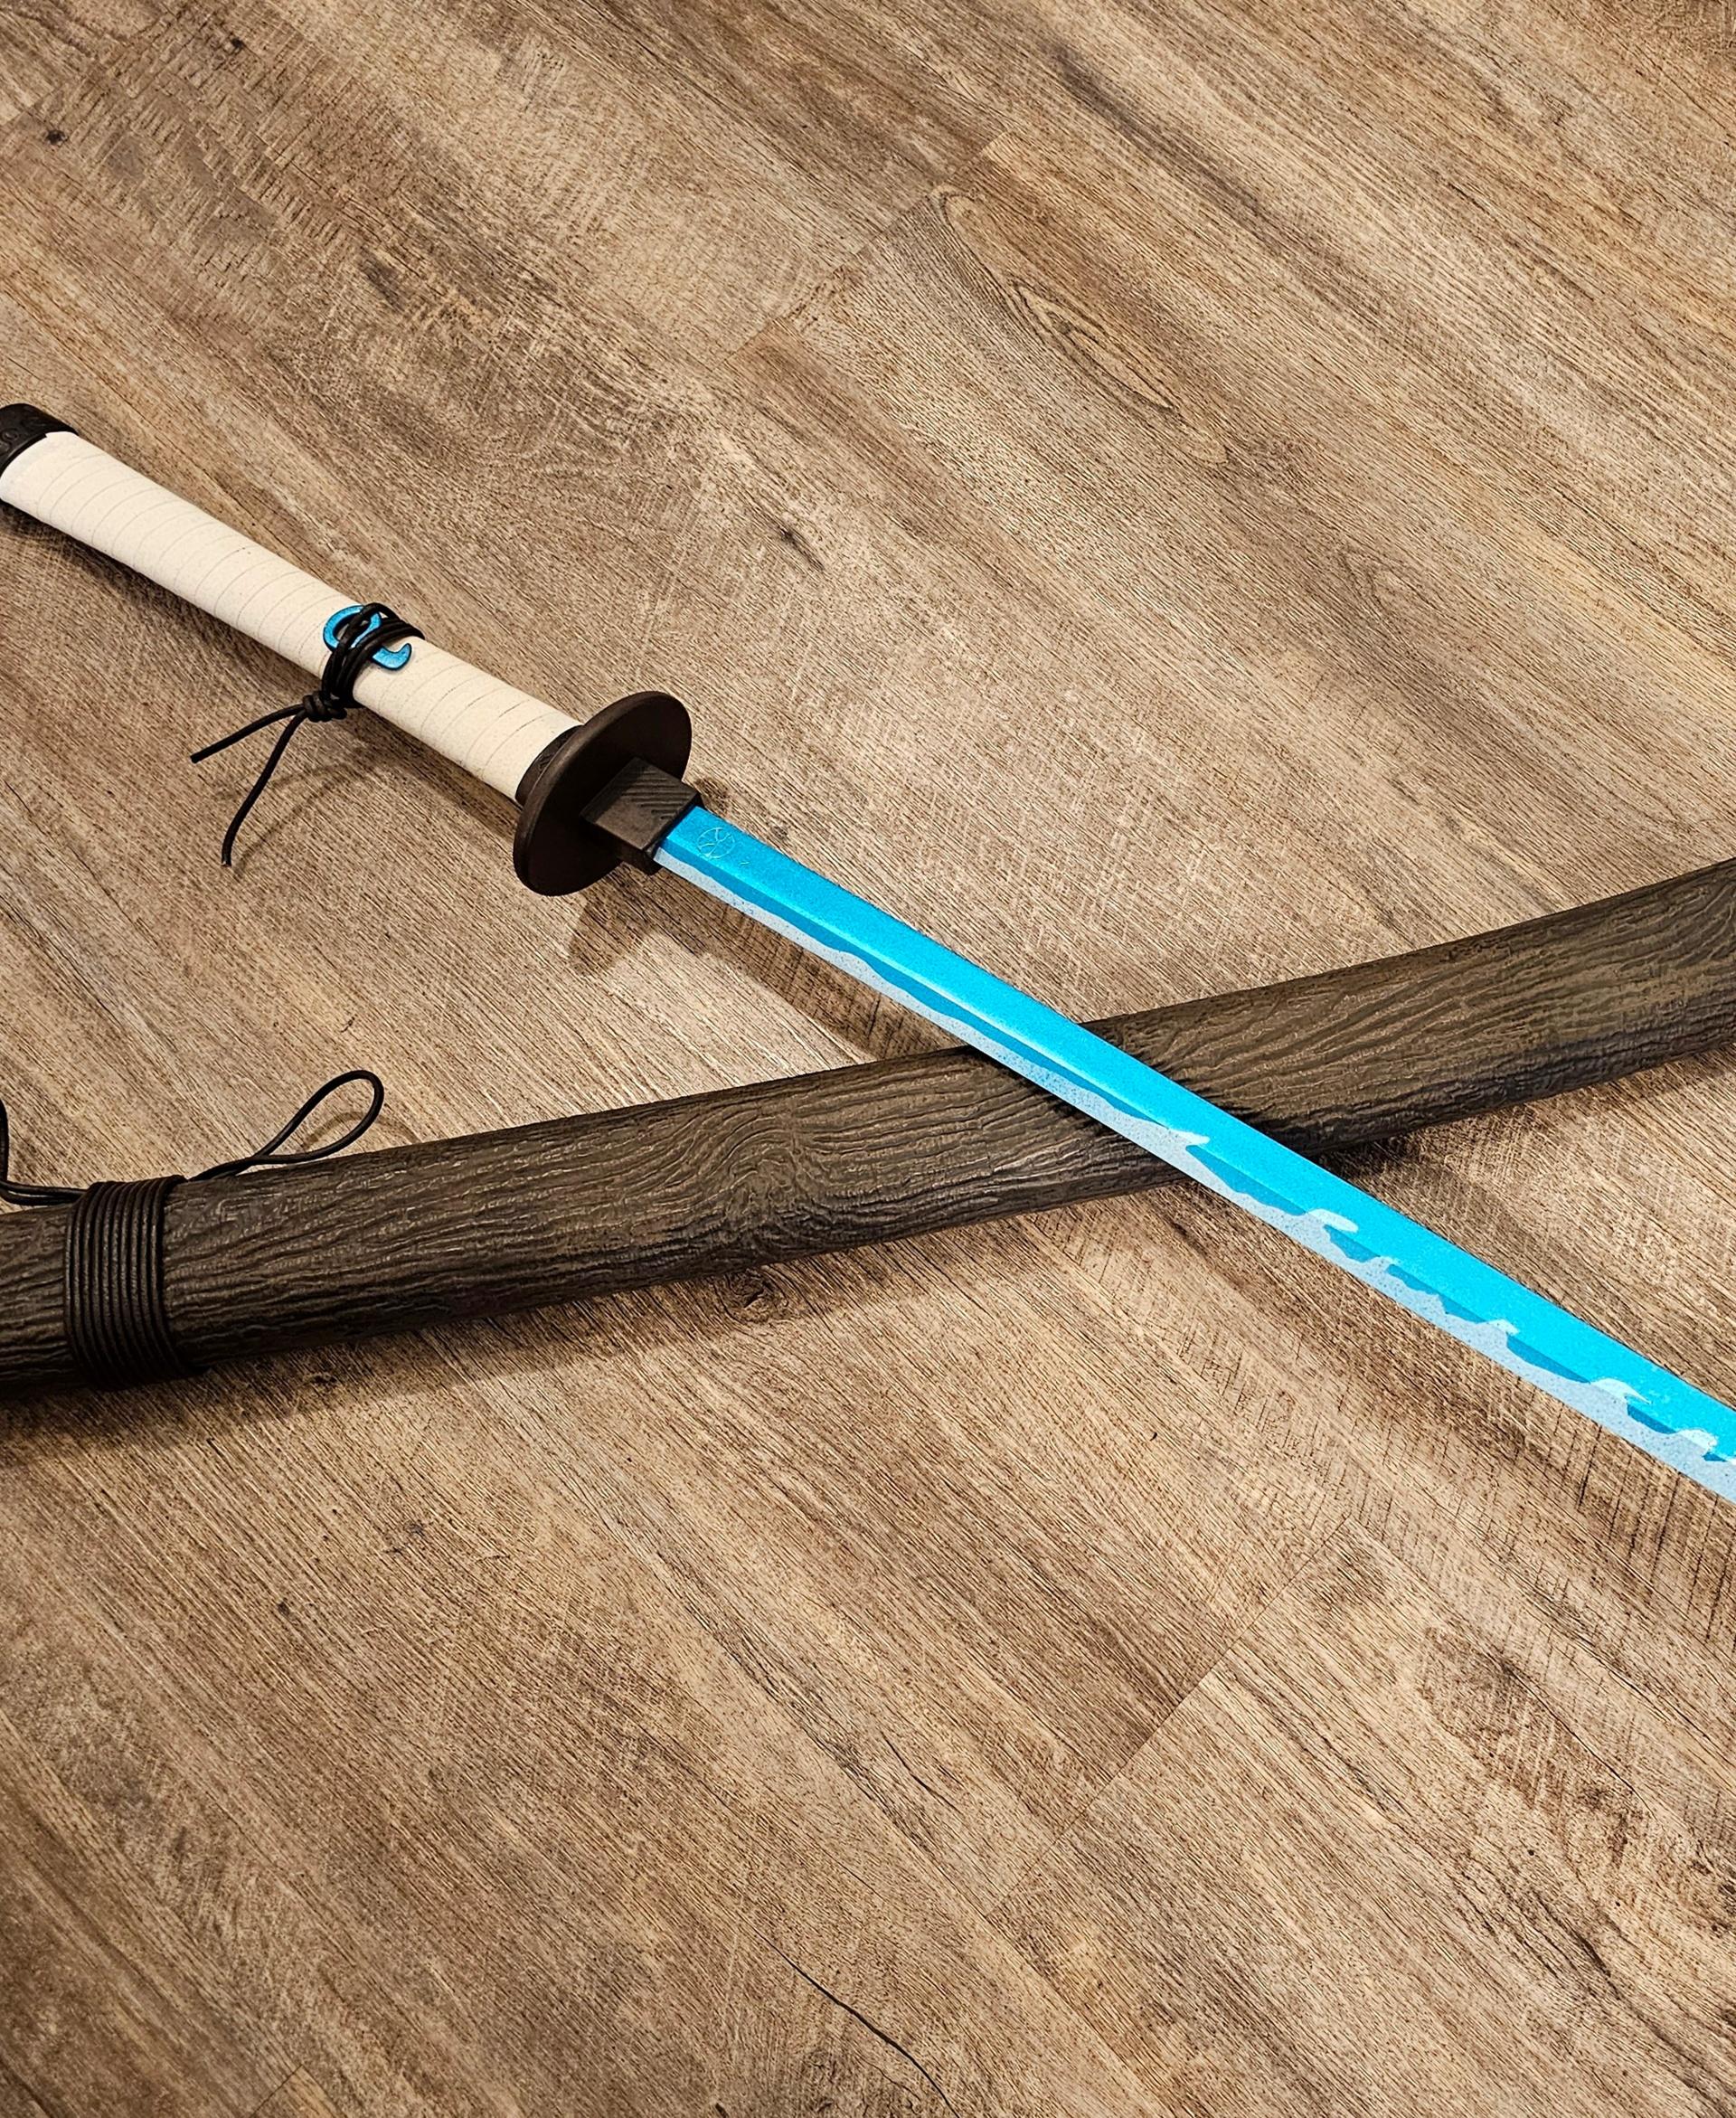 Mizu's Sword and Sheath from Blue Eye Samurai 3d model